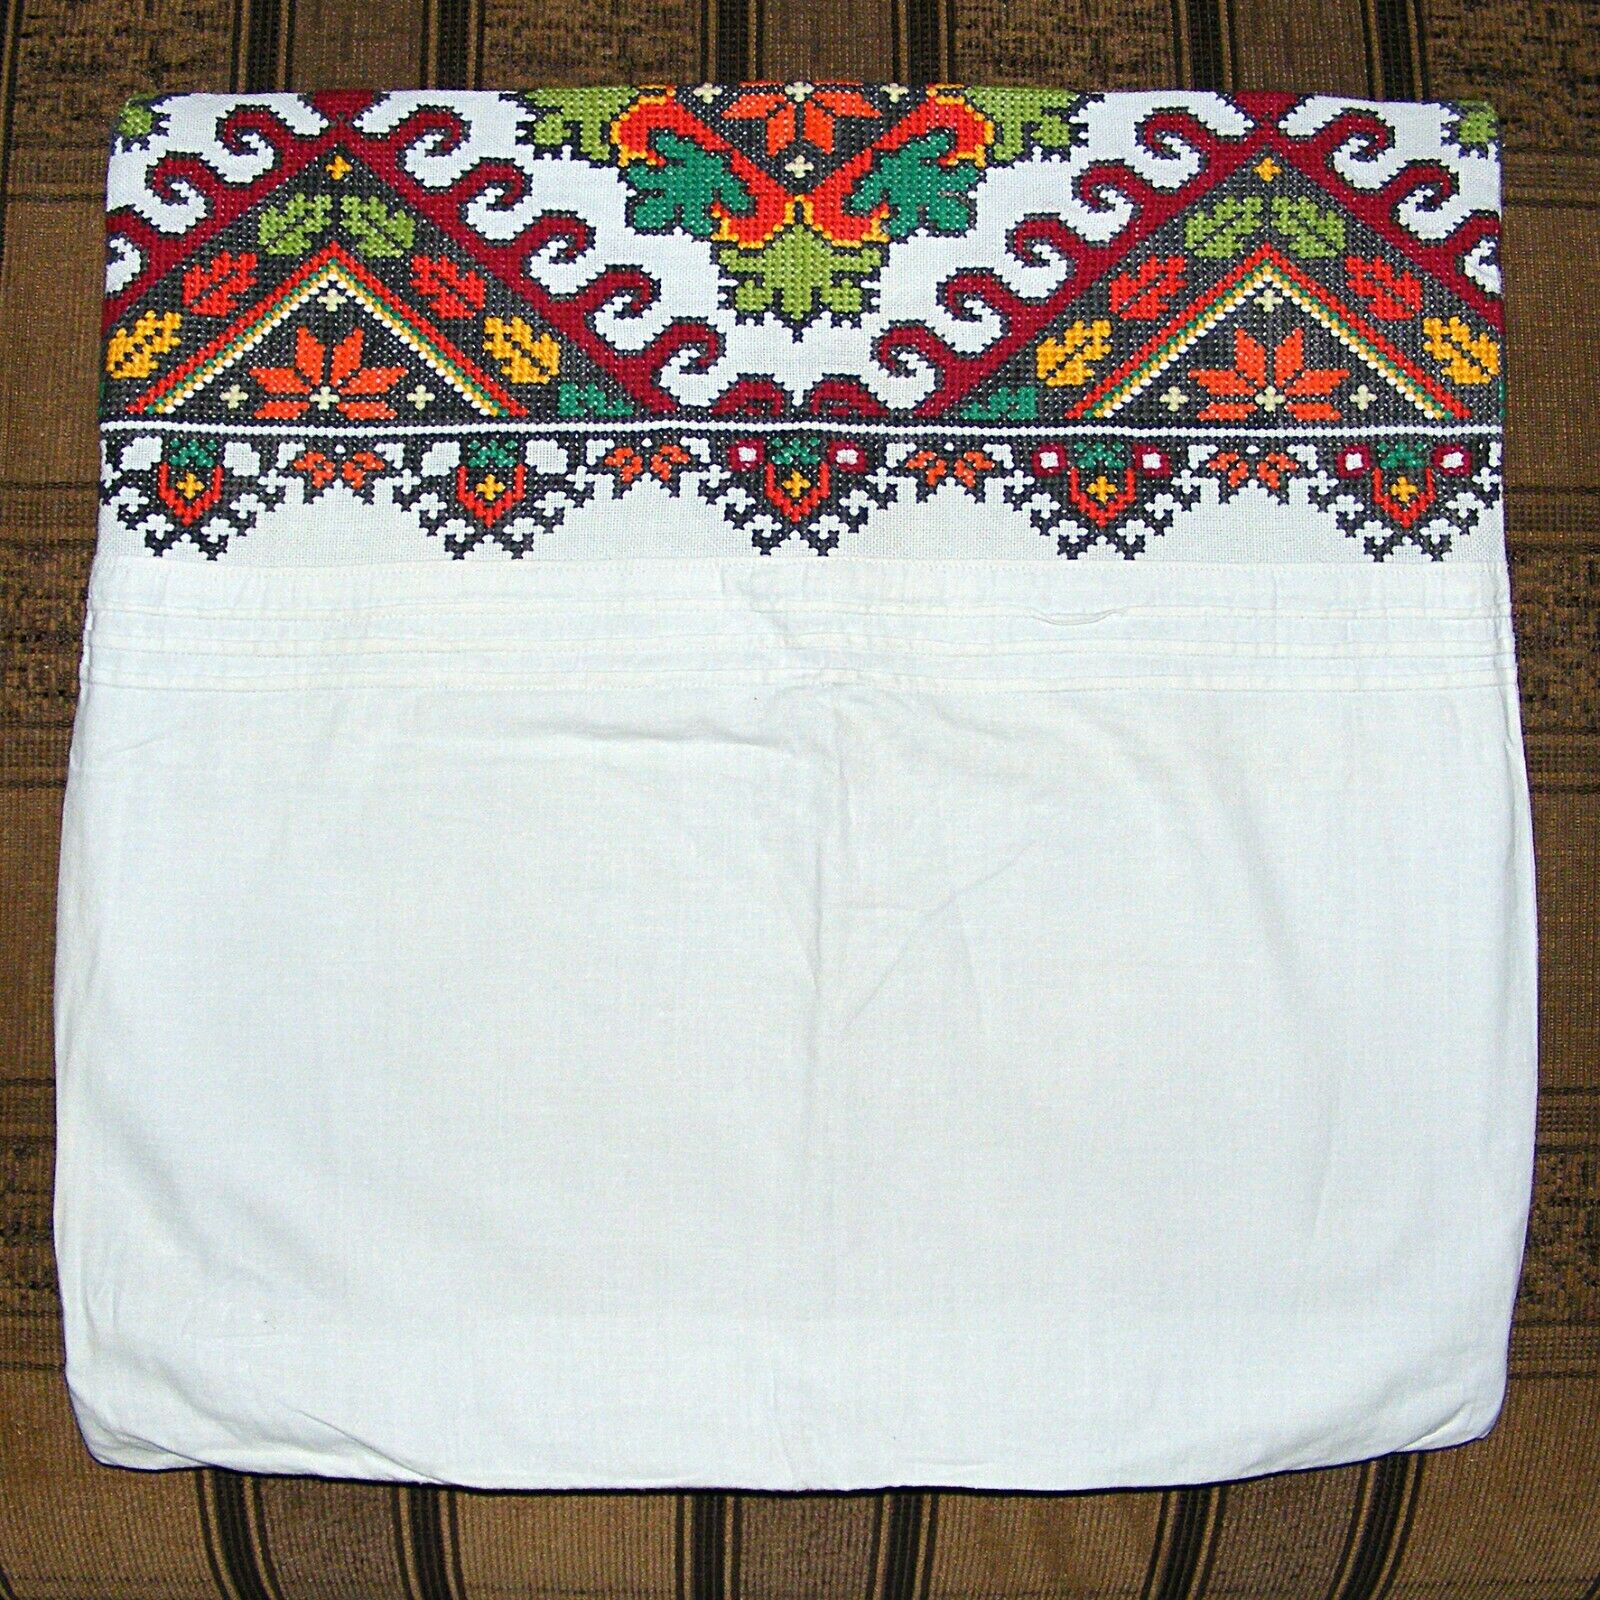 Vintage Old Embroidered Pillowcase on Small Pillow Ukrainian Folk Art Embroidery